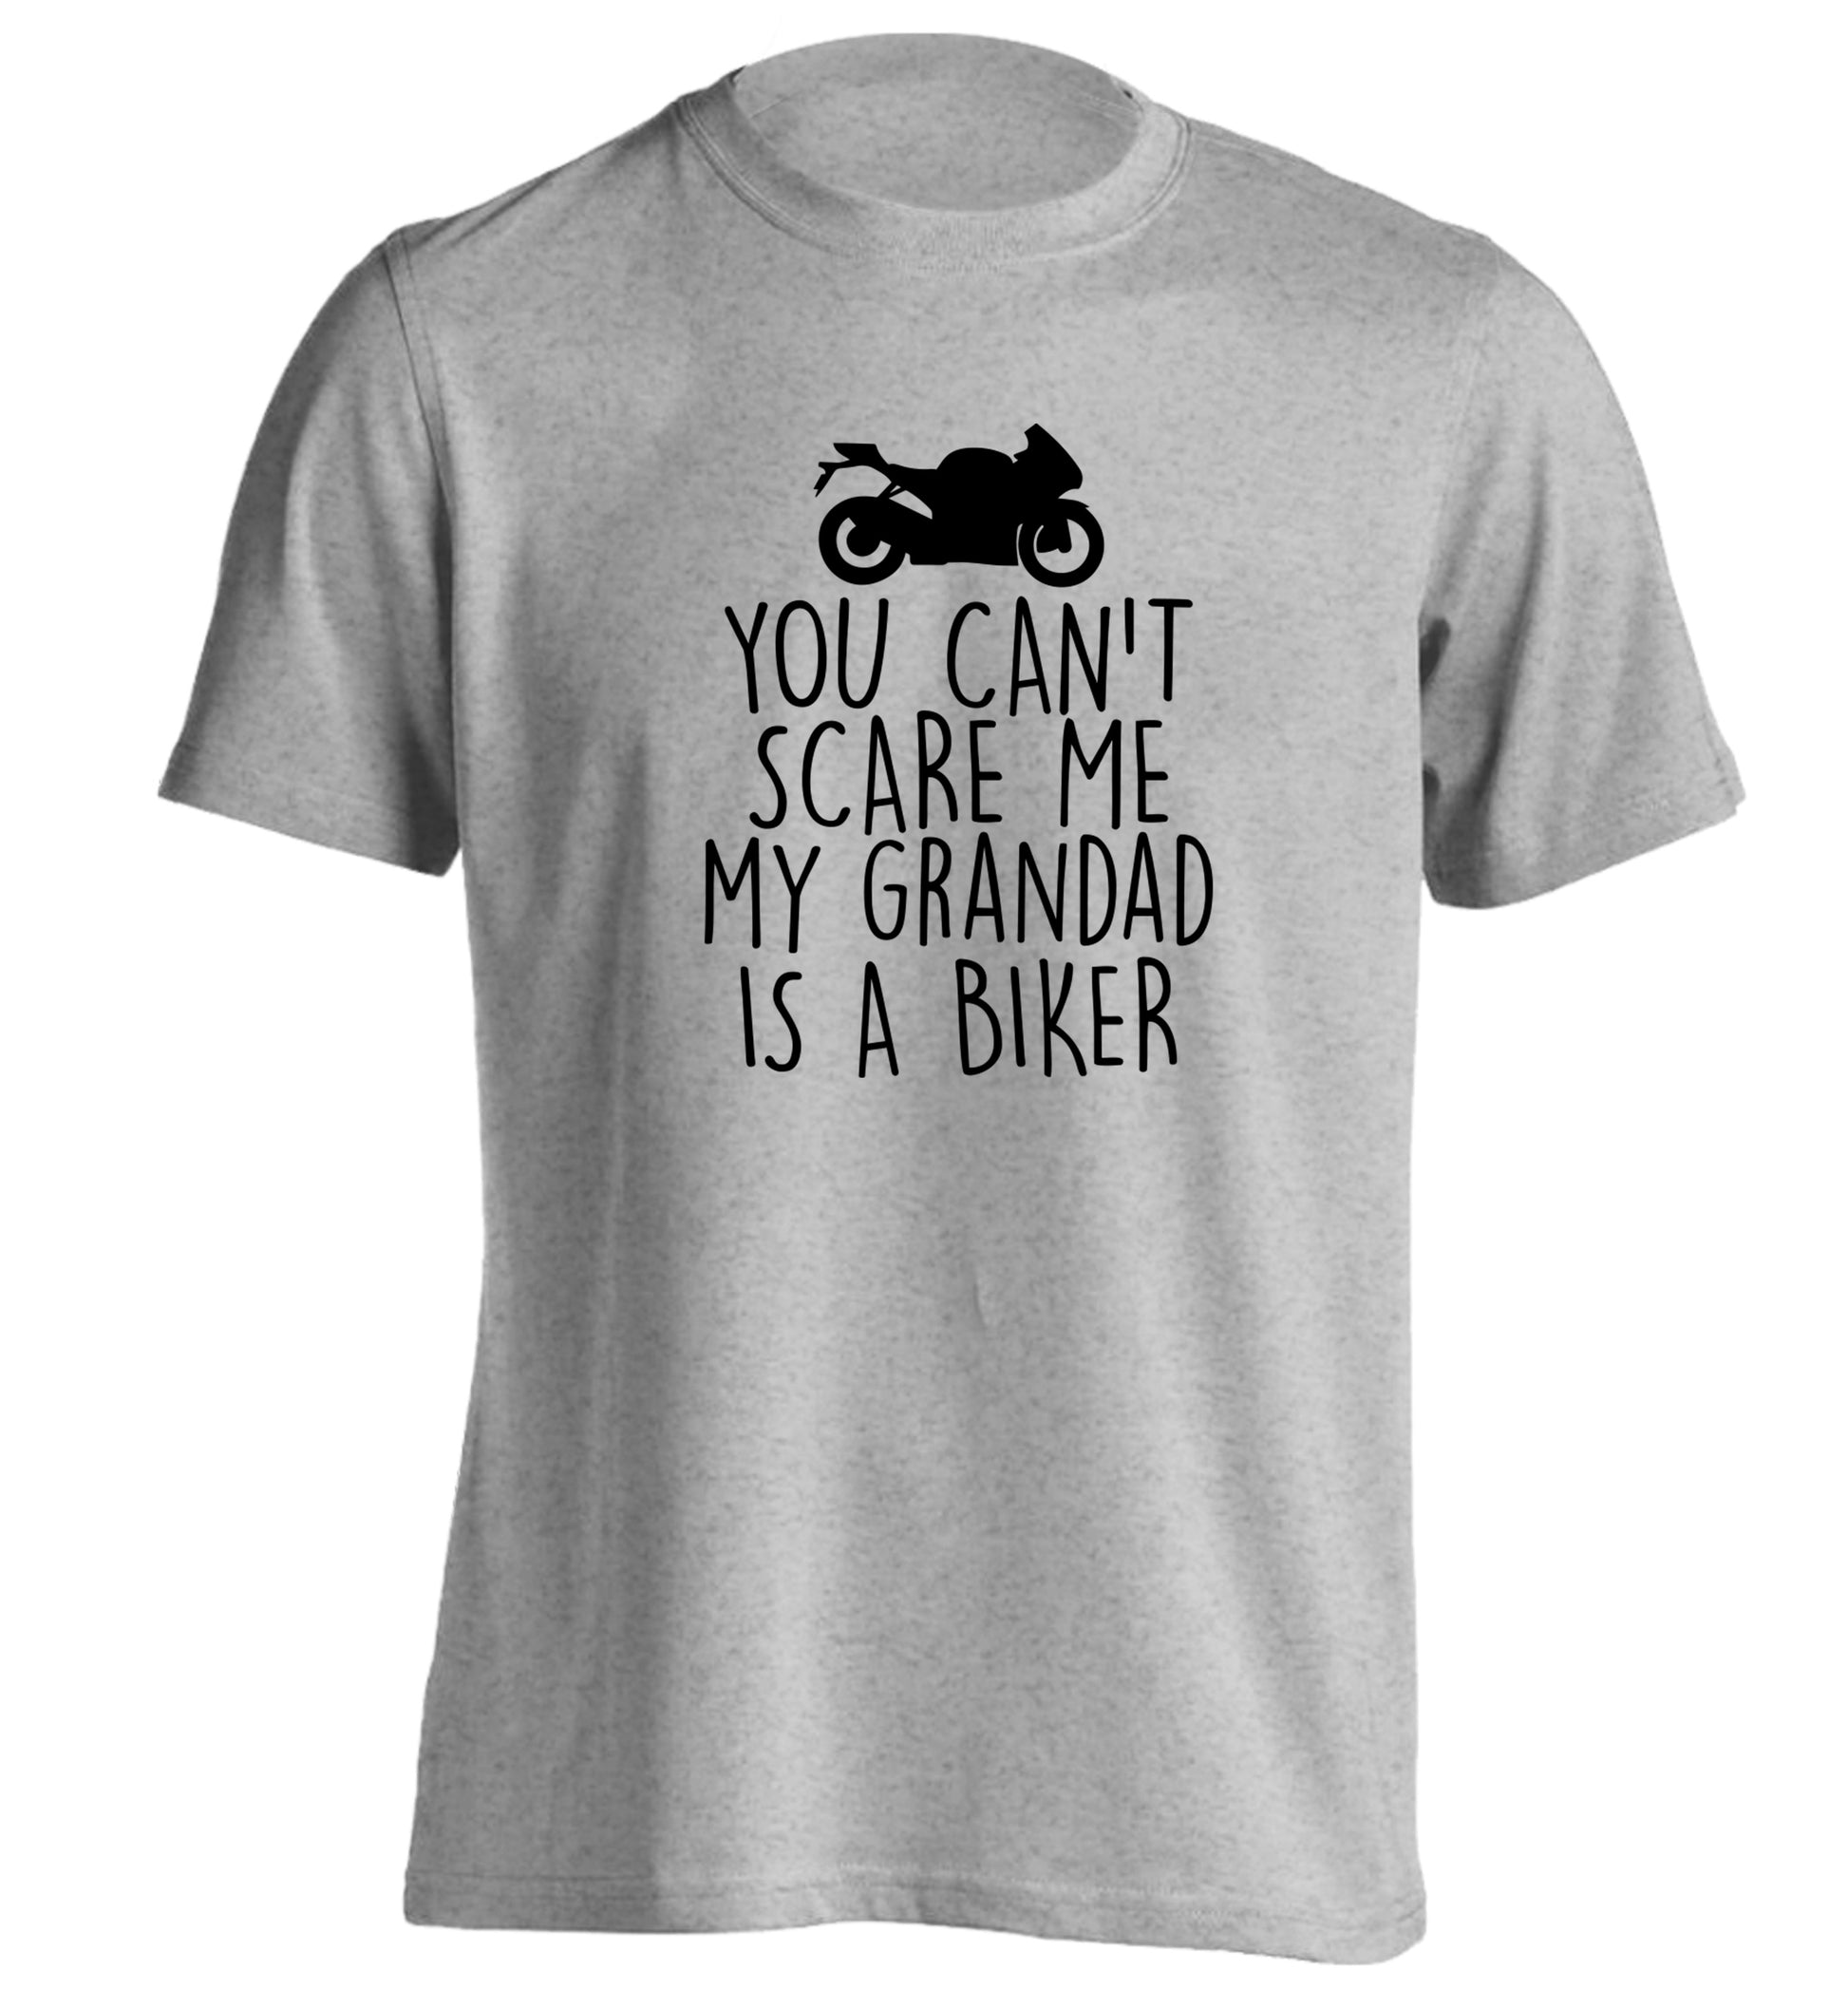 You can't scare me my grandad is a biker adults unisex grey Tshirt 2XL